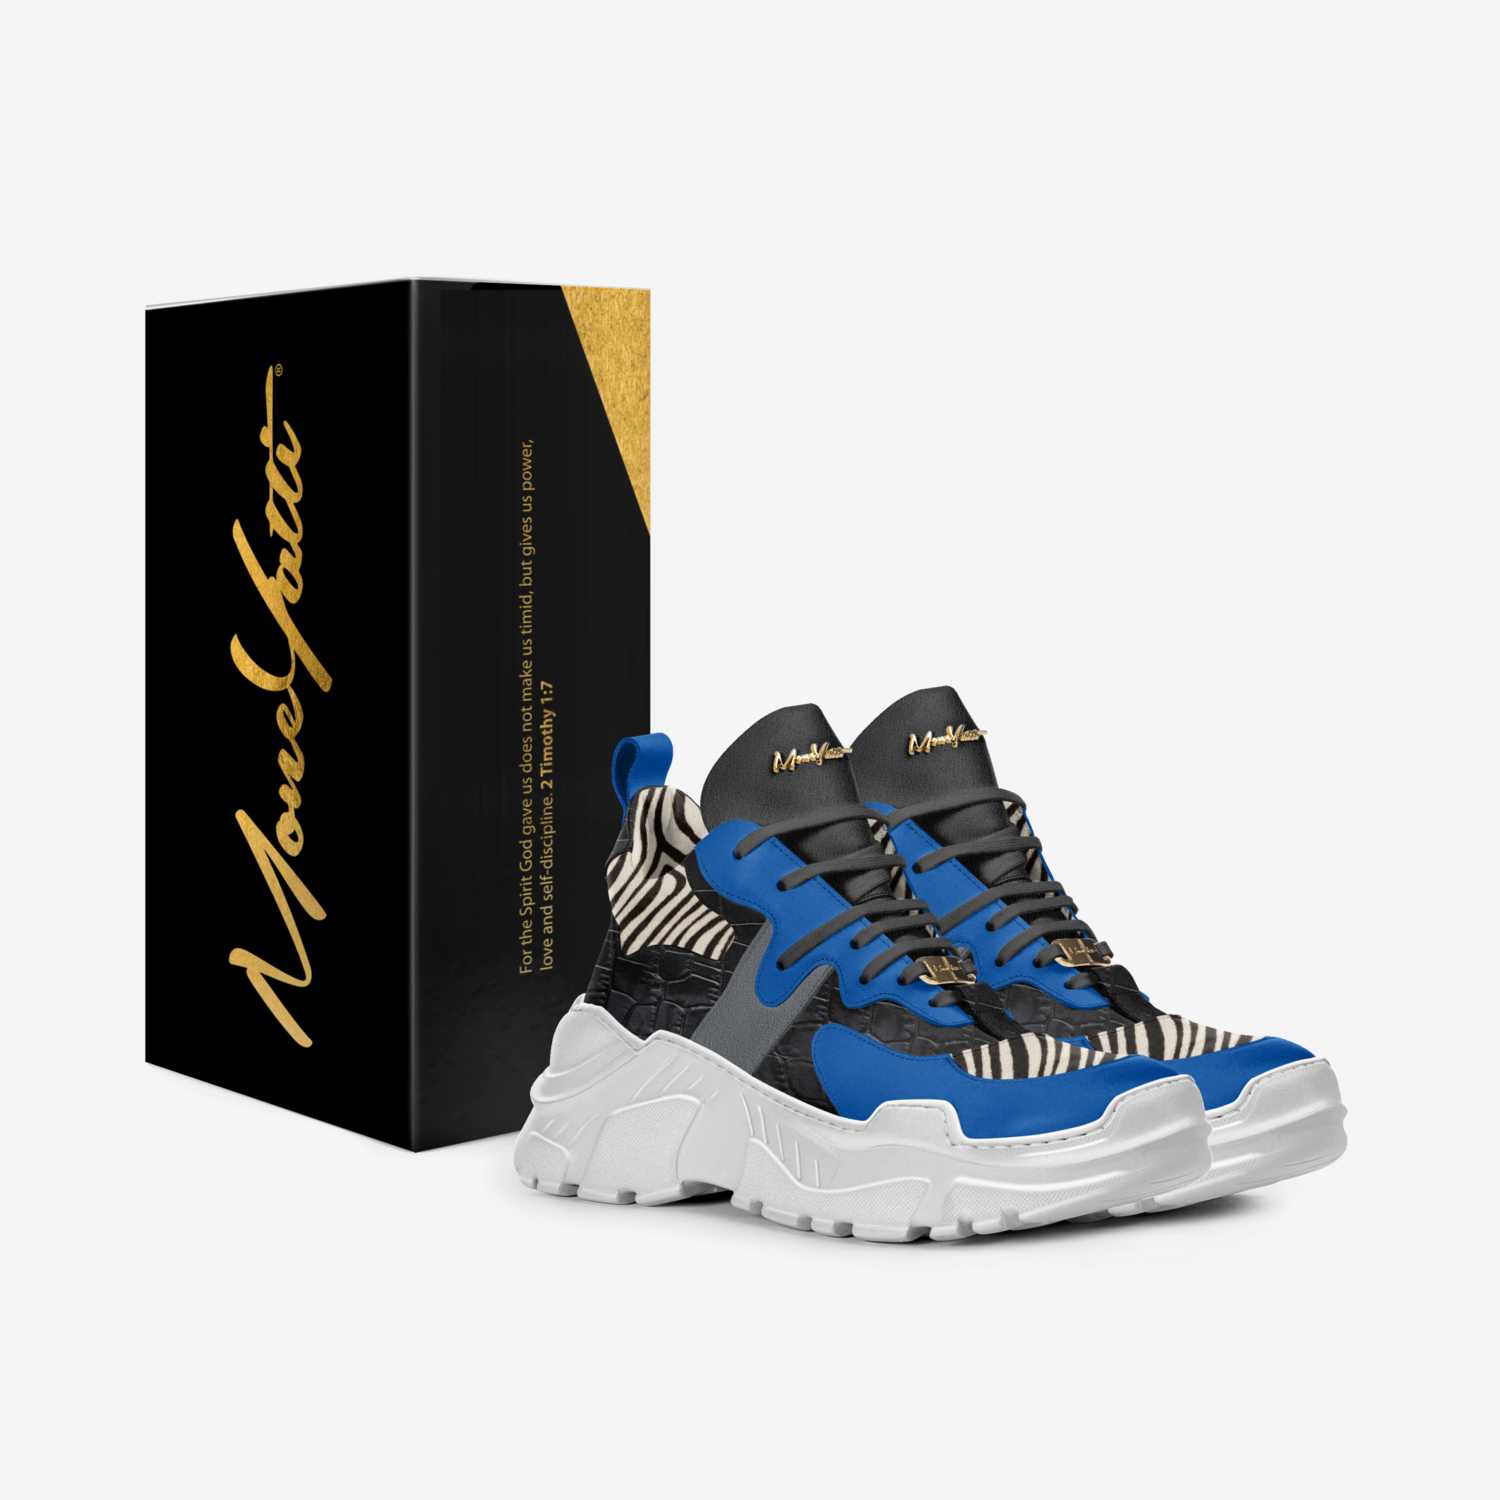 Murks 2.0 H19 custom made in Italy shoes by Moneyatti Brand | Box view